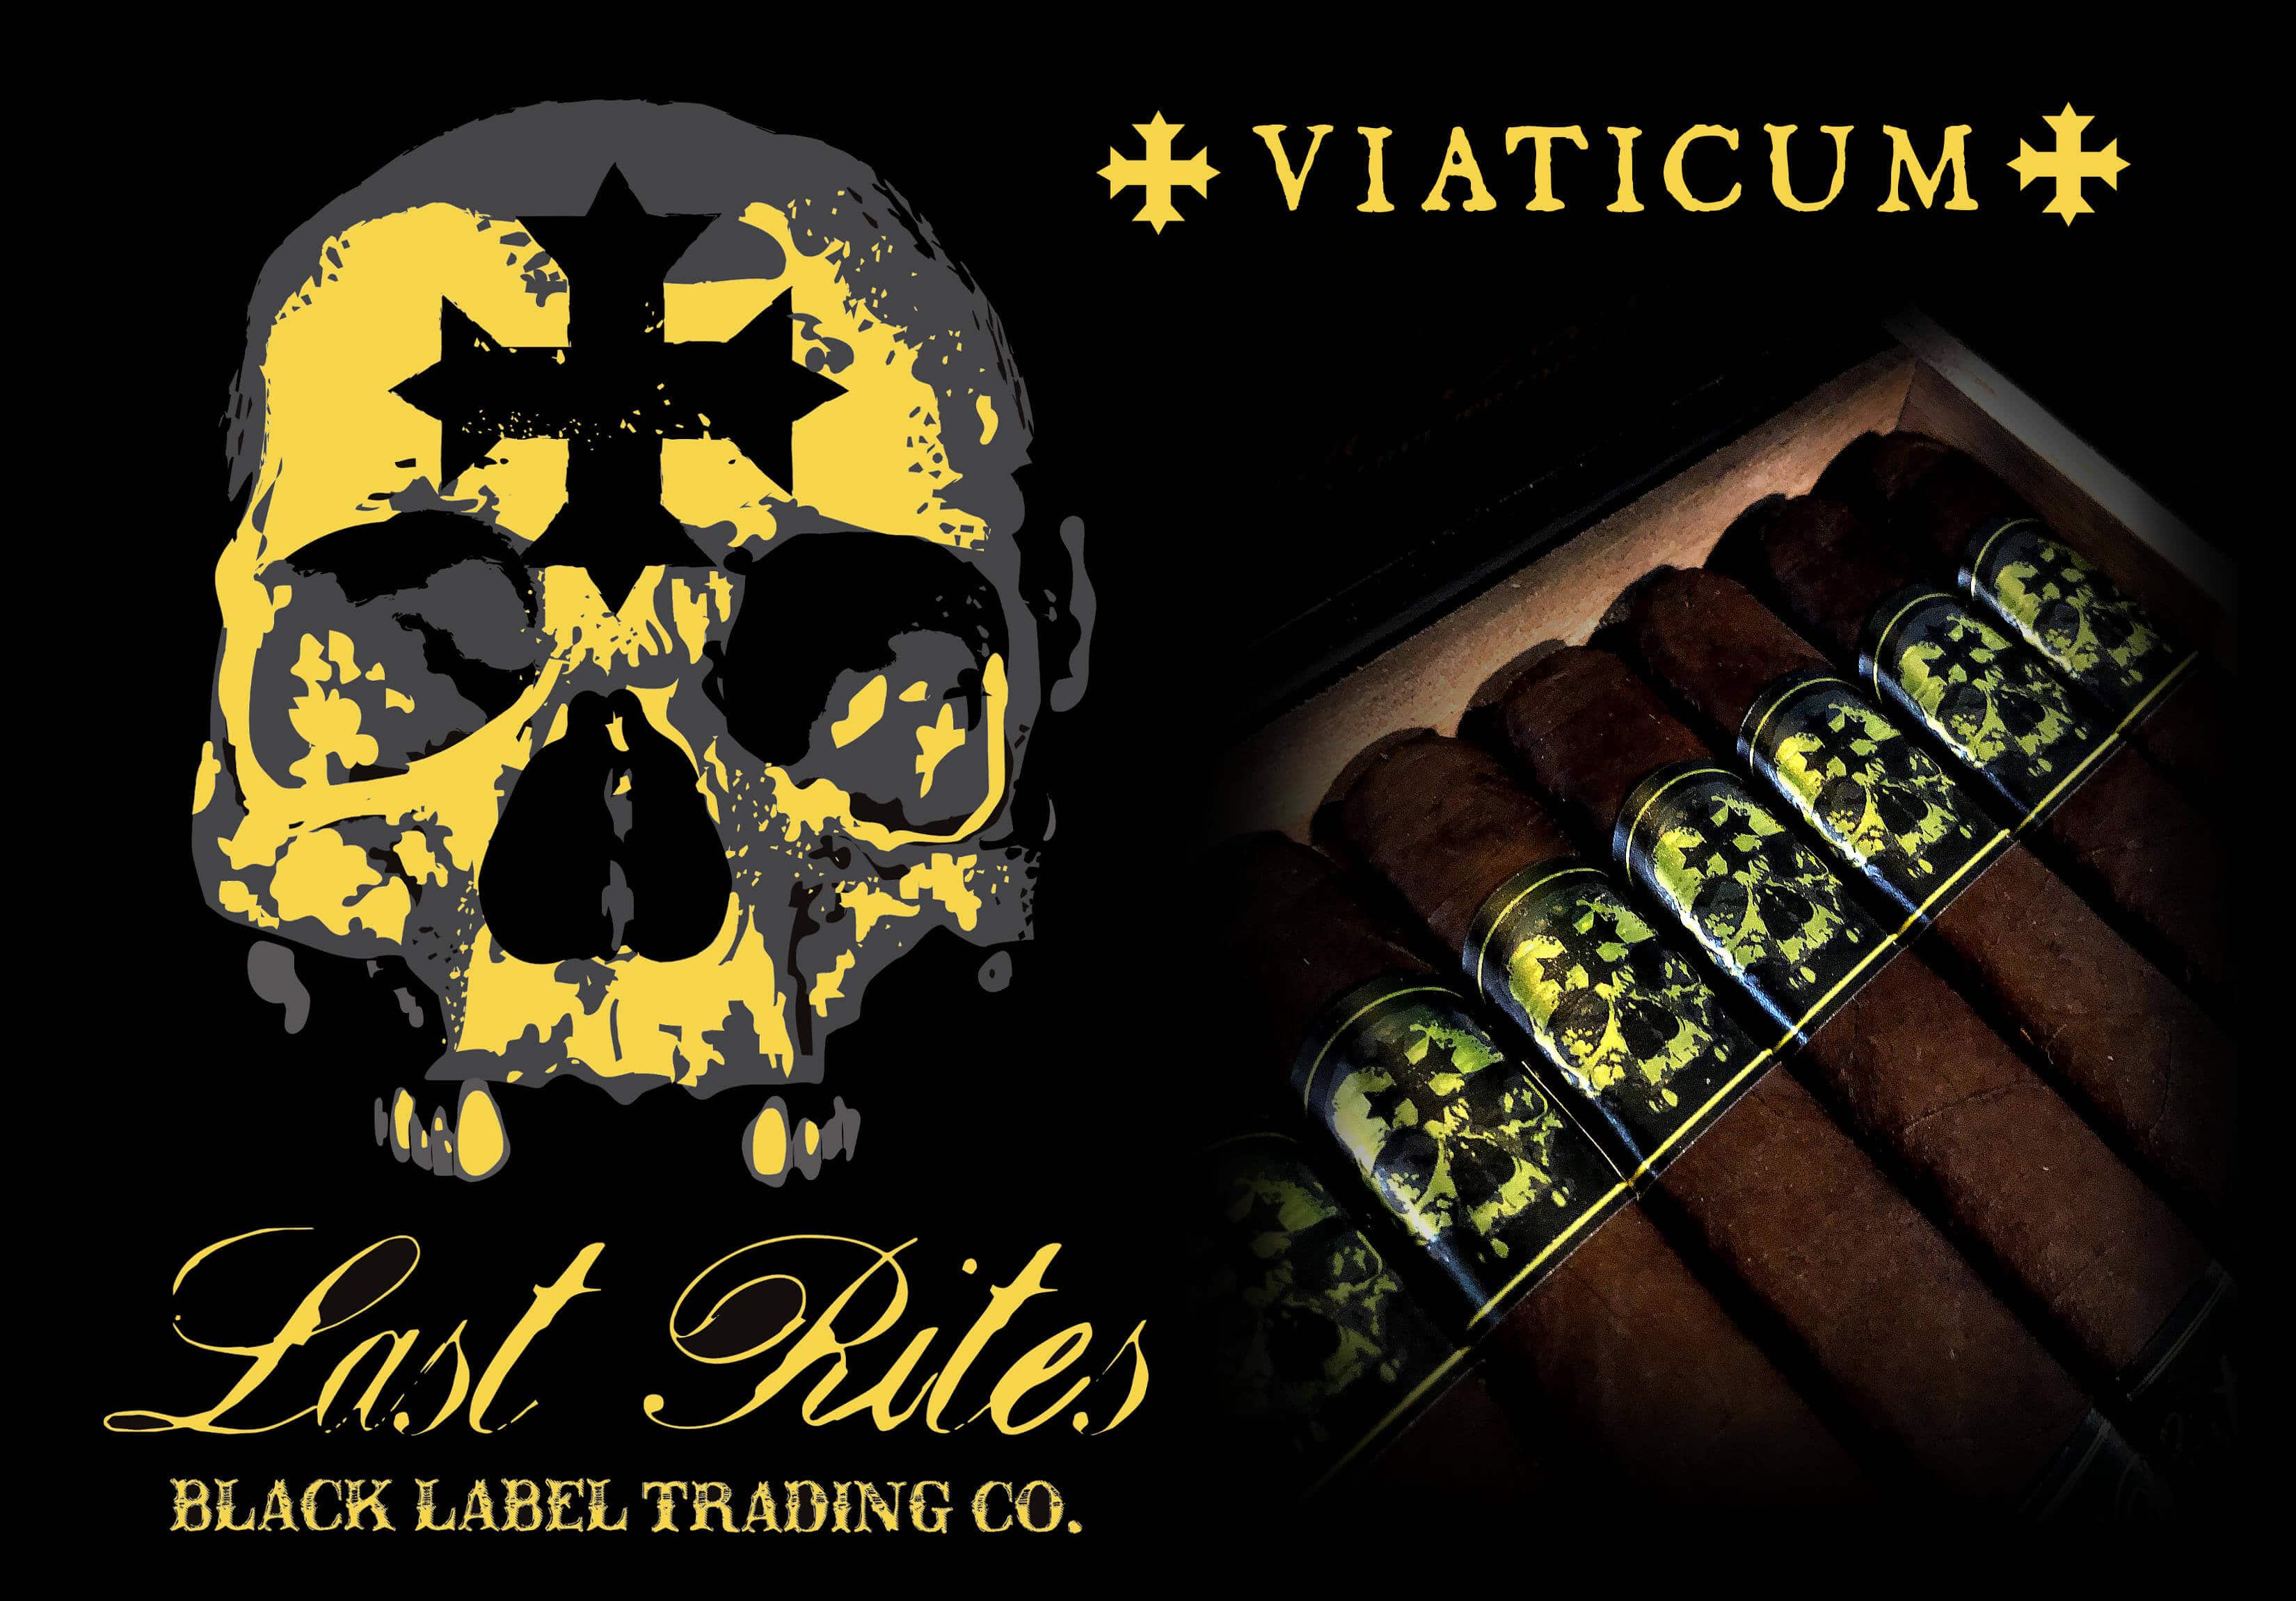 Cigar News: Black Label Trading Company Announces Last Rites Viaticum